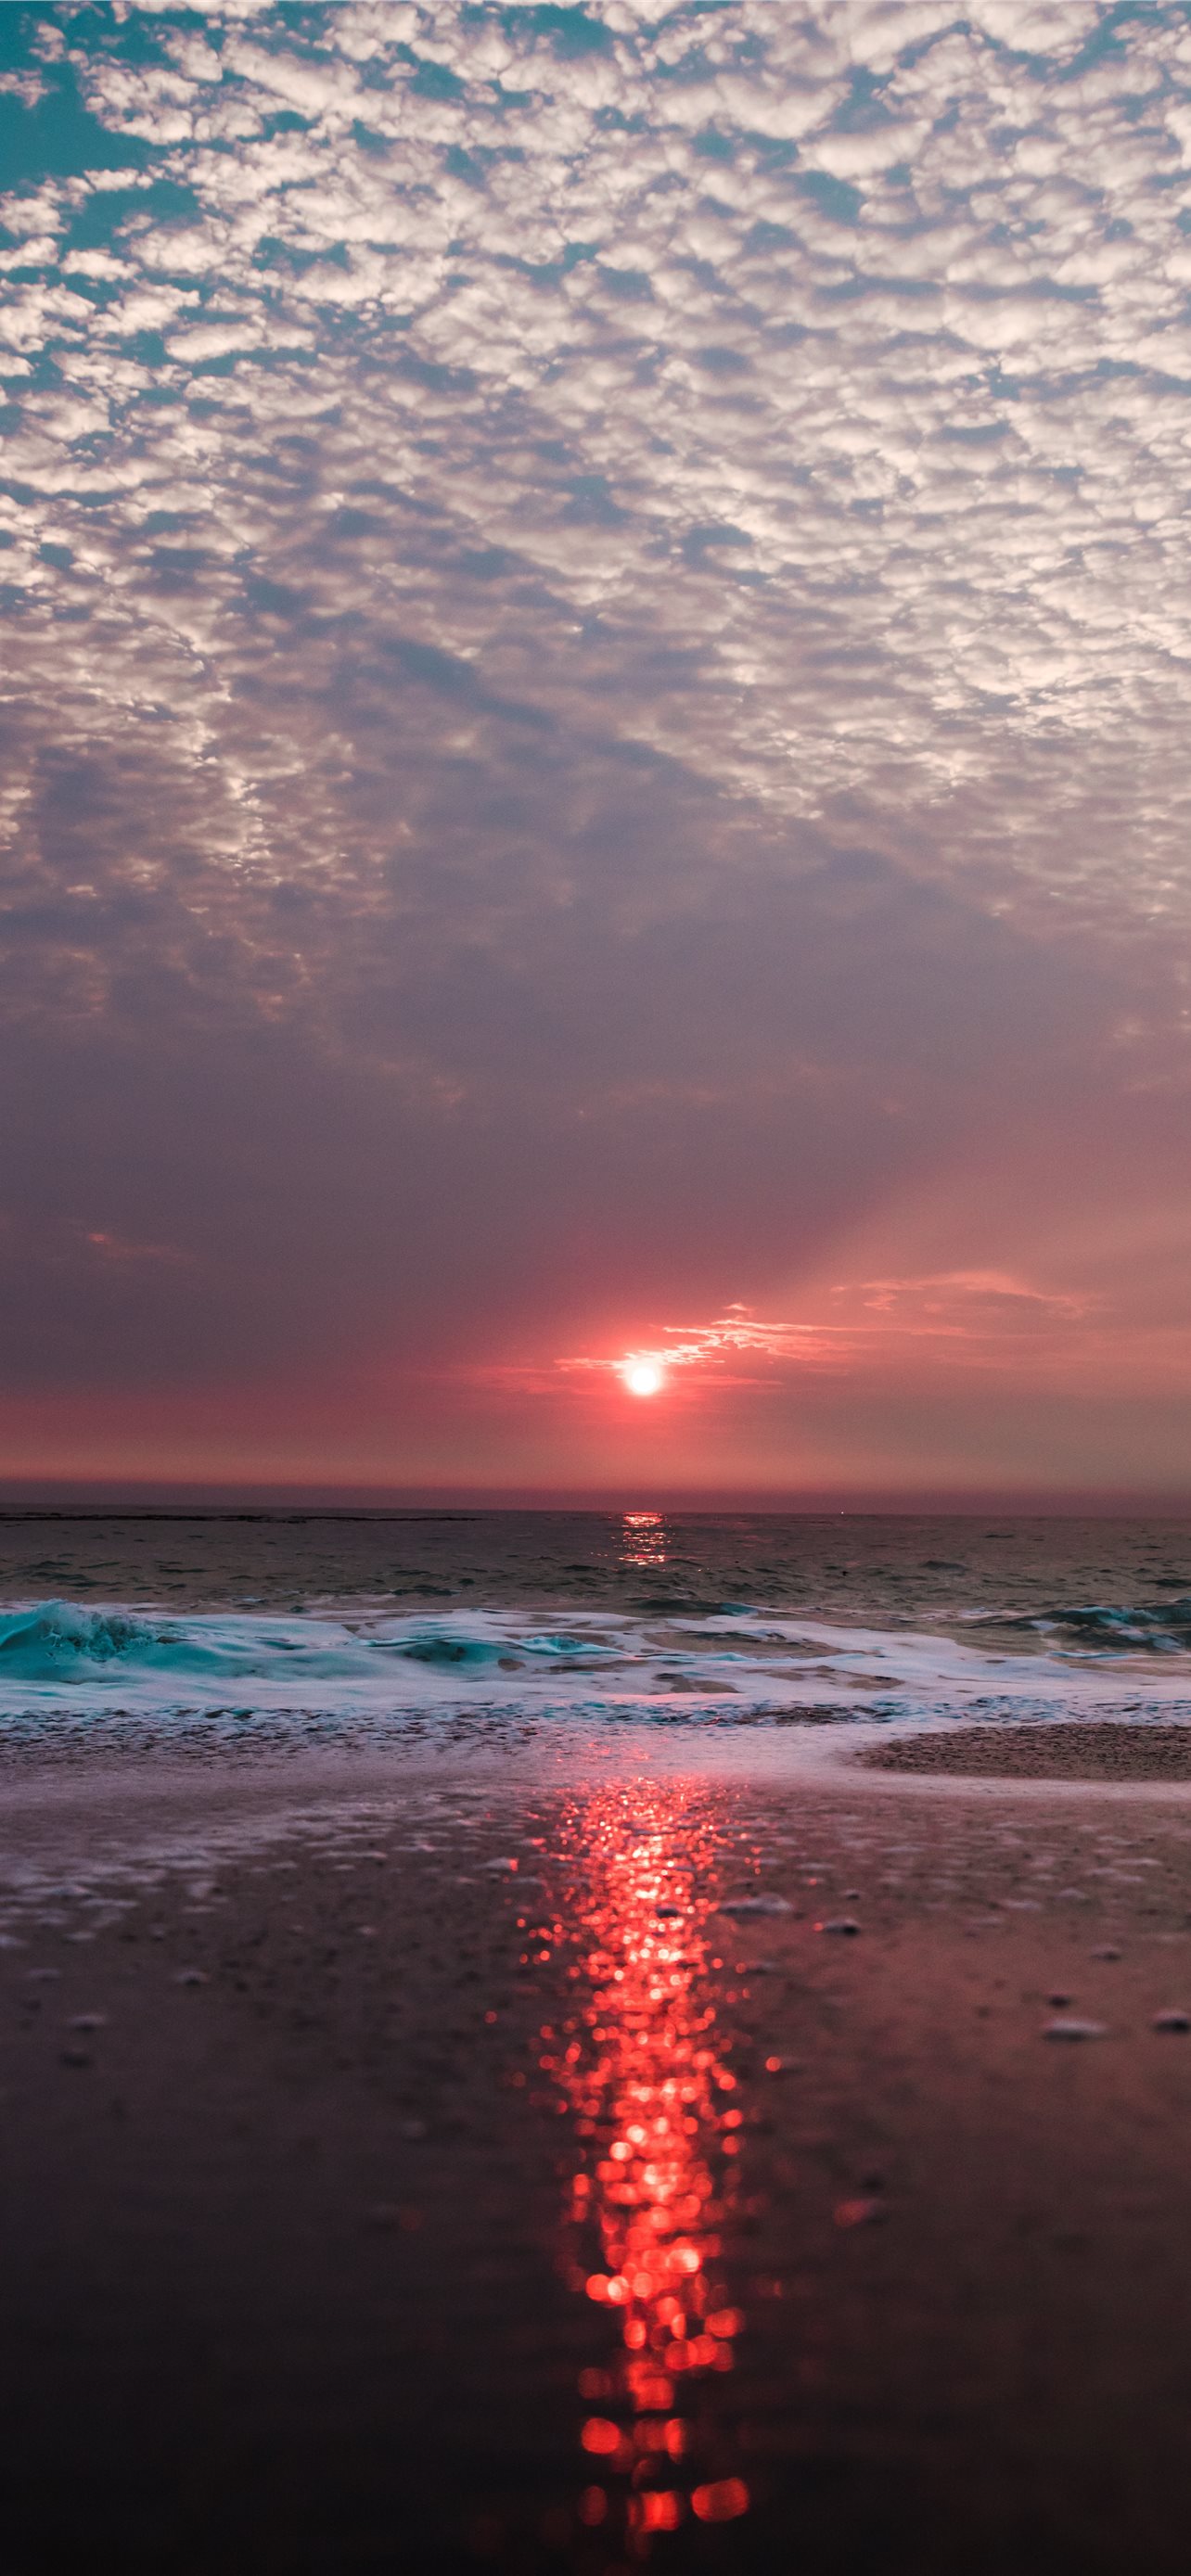 beach under cloudy sky during sunset iPhone wallpaper 